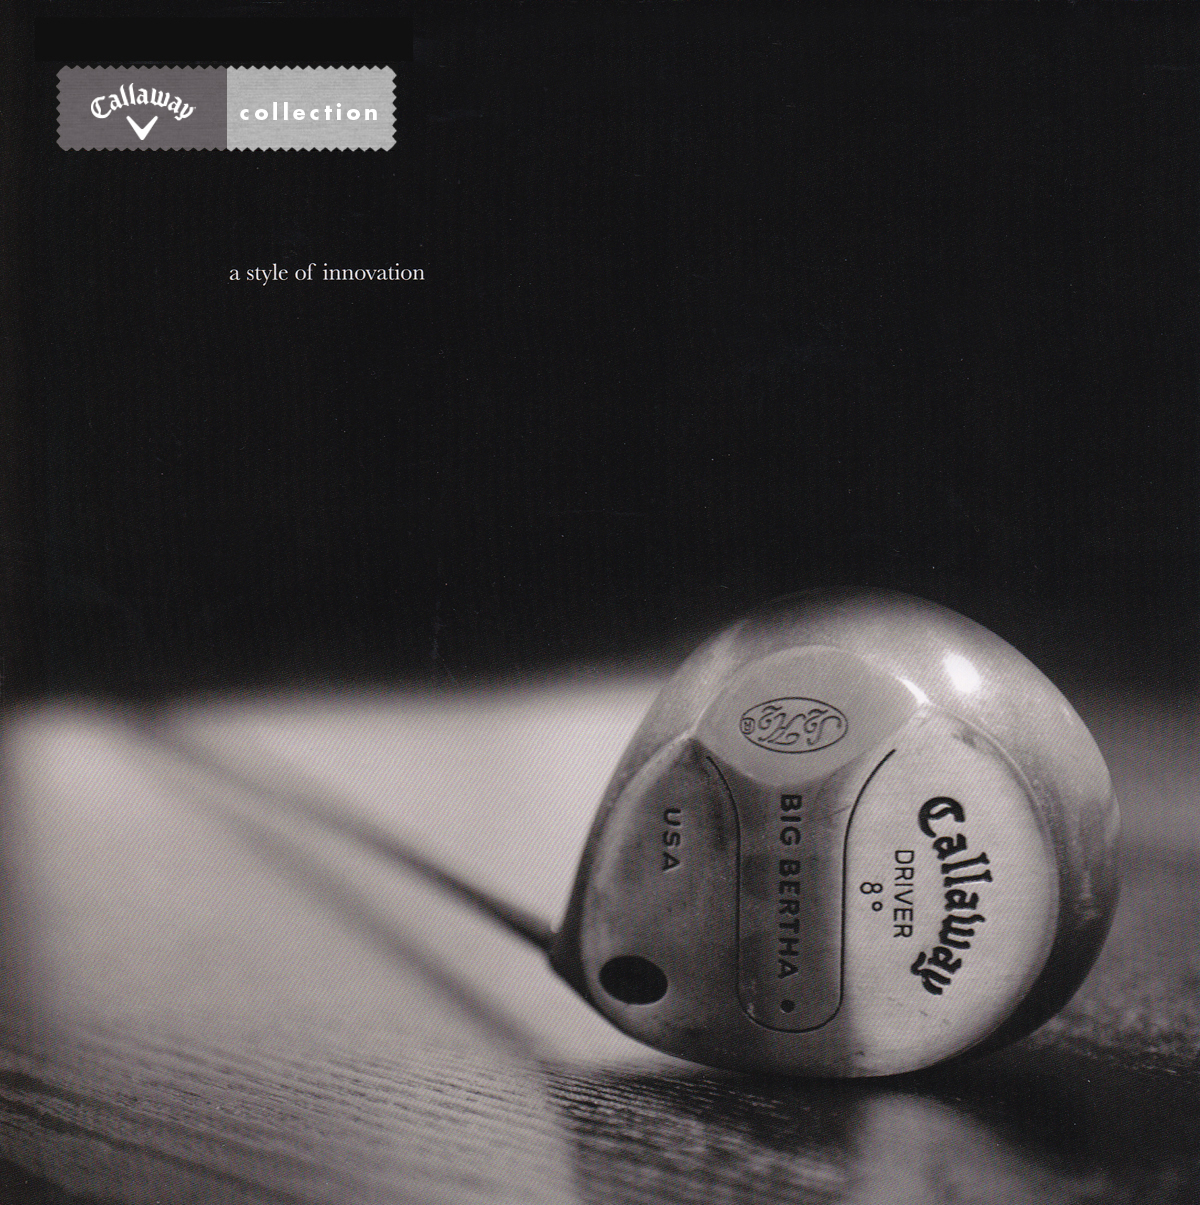 Adobe Portfolio Callaway Golf golf catalog print Collateral apparel sports metallic ink emboss box envelope